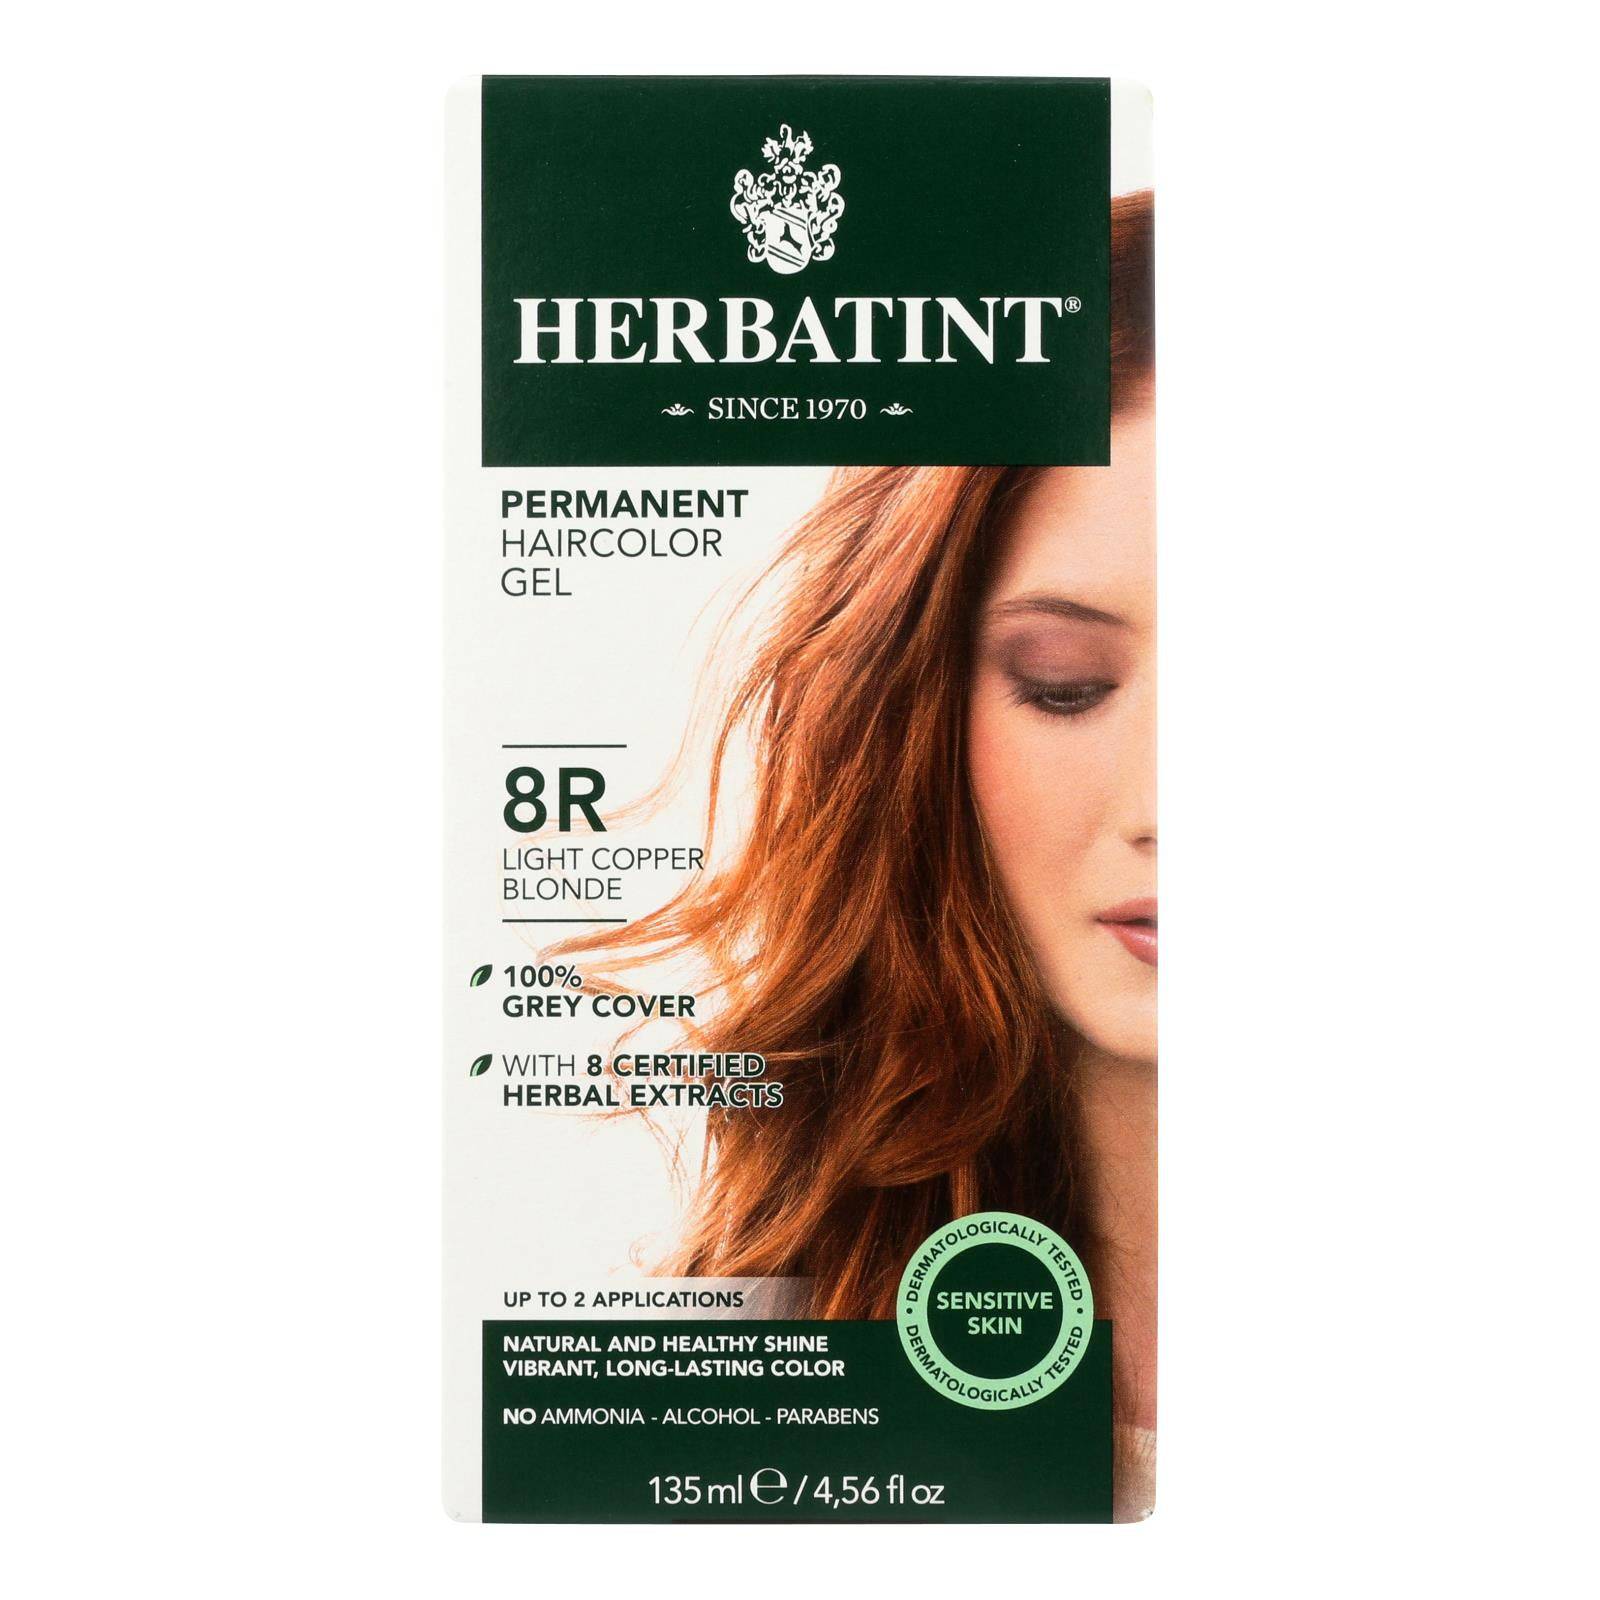 Buy Herbatint Permanent Herbal Haircolour Gel 8r Light Copper Blonde - 135 Ml  at OnlyNaturals.us